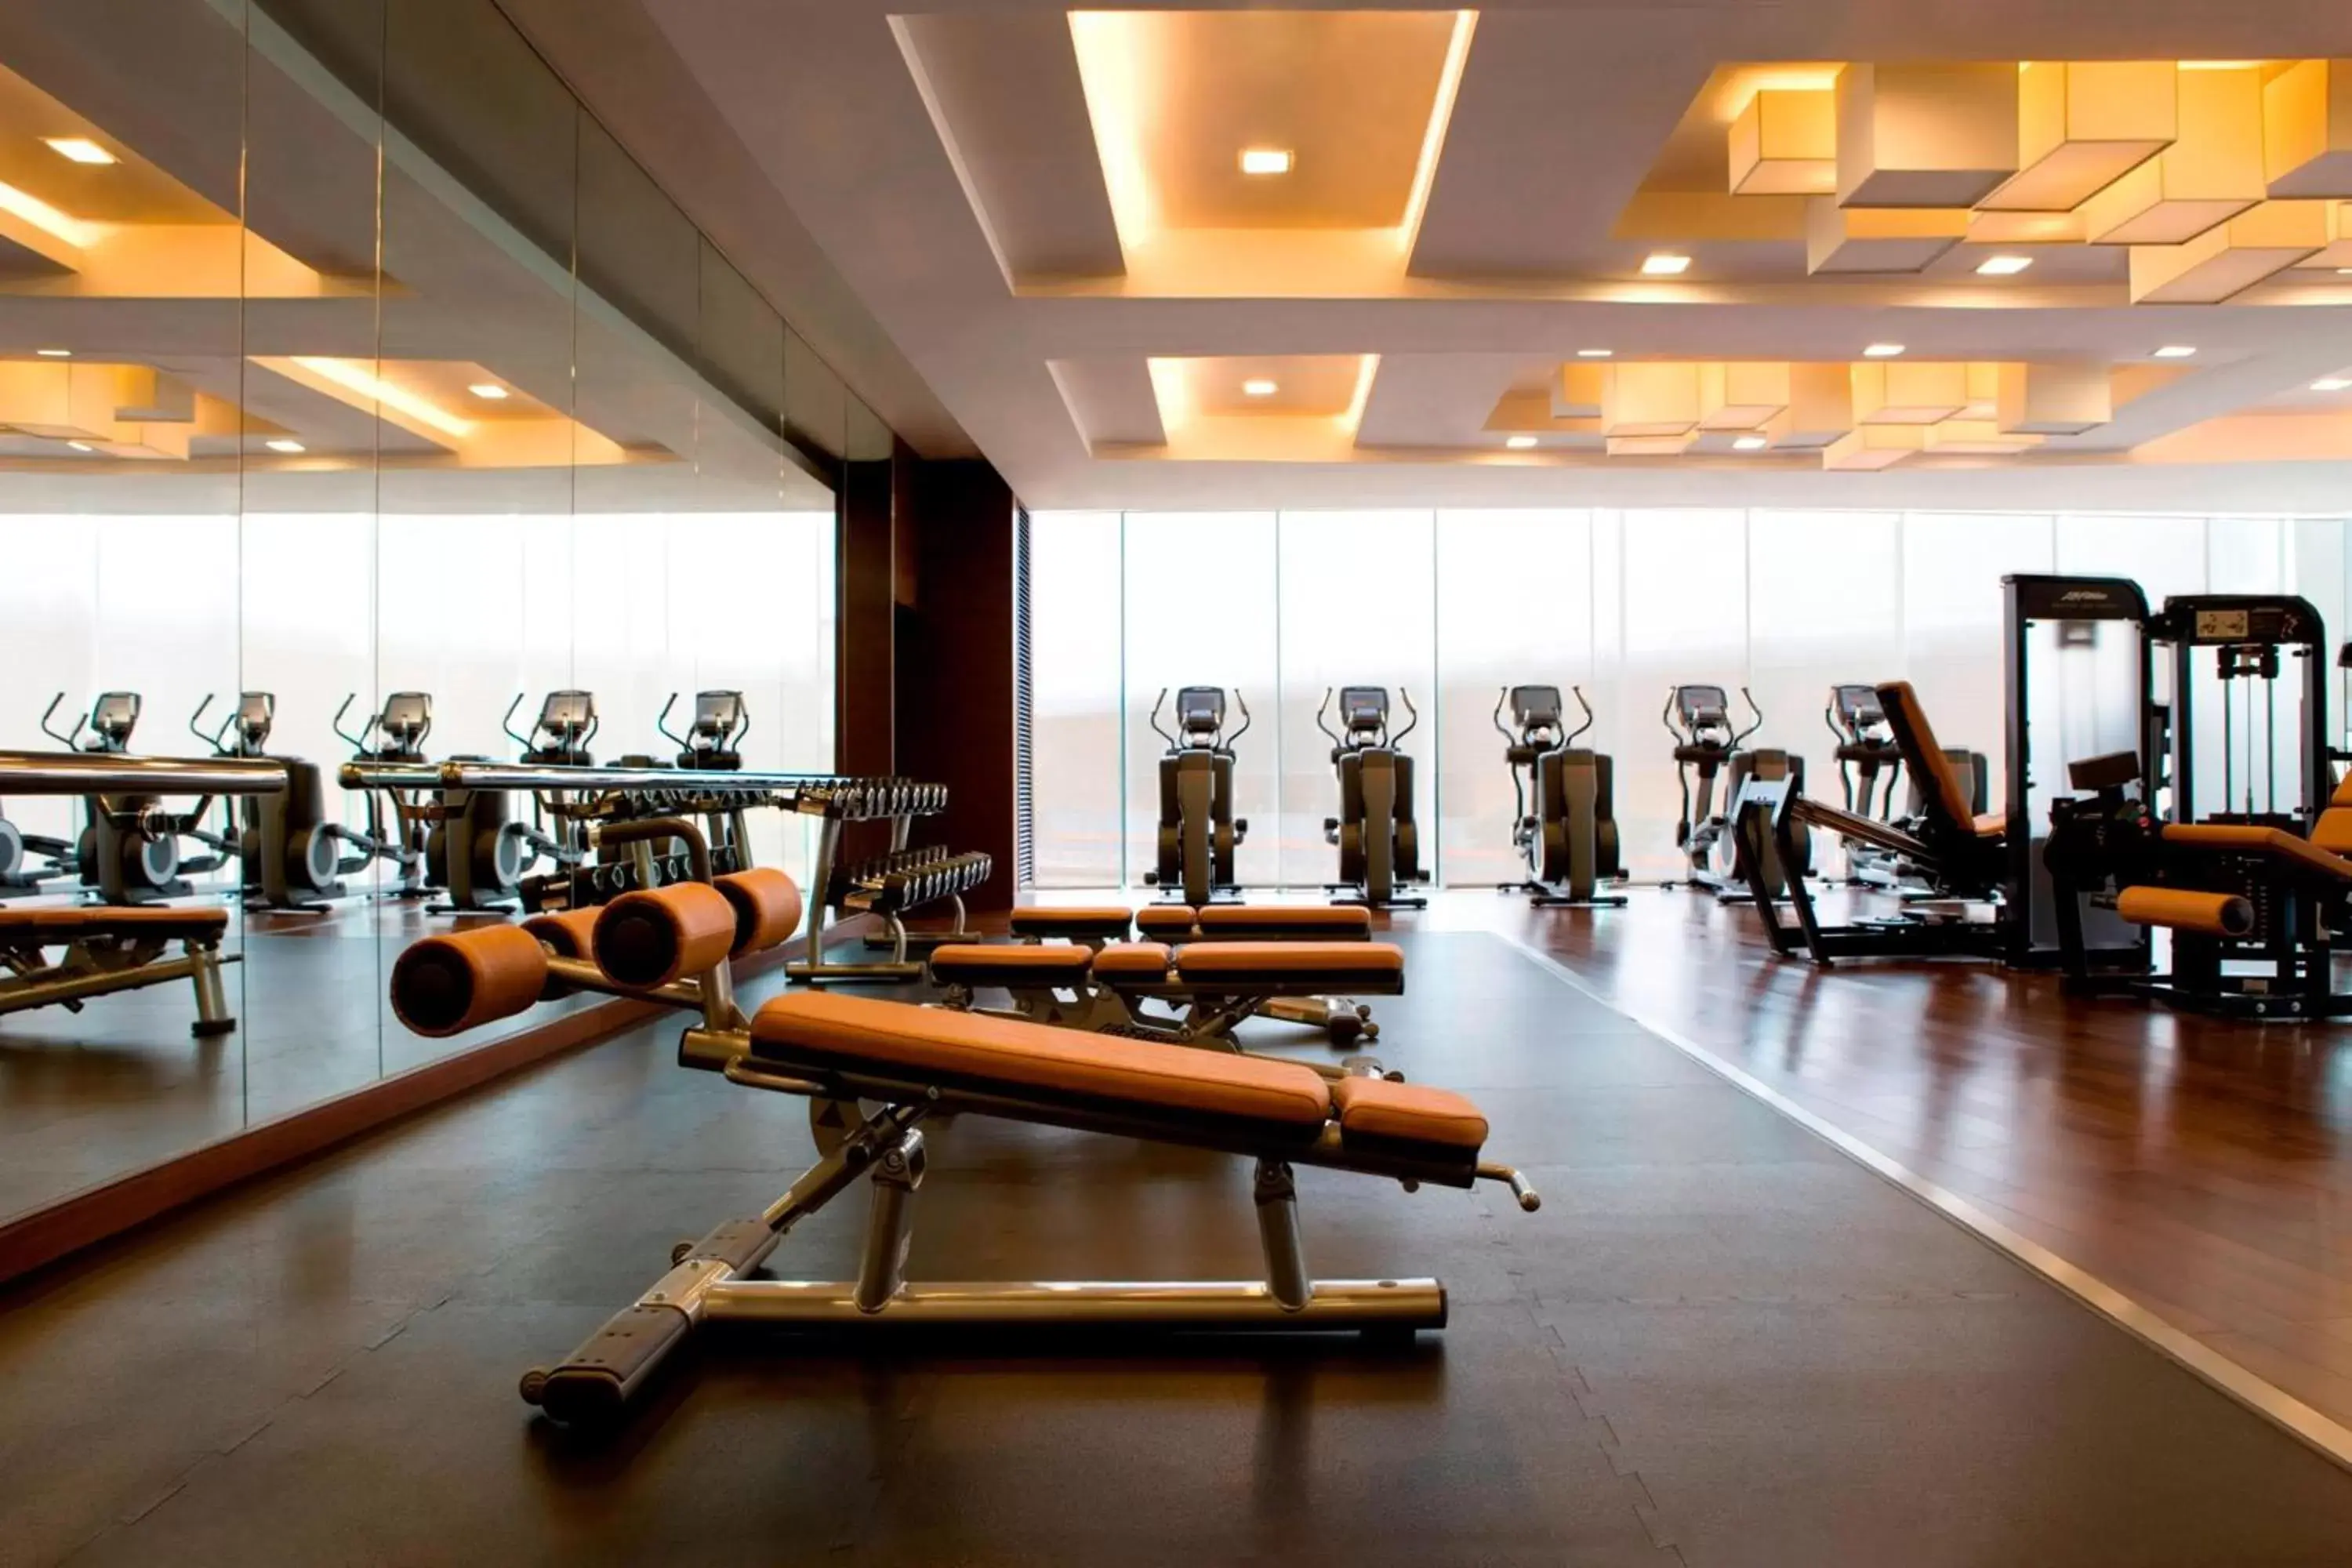 Fitness centre/facilities, Fitness Center/Facilities in Hong Kong SkyCity Marriott Hotel